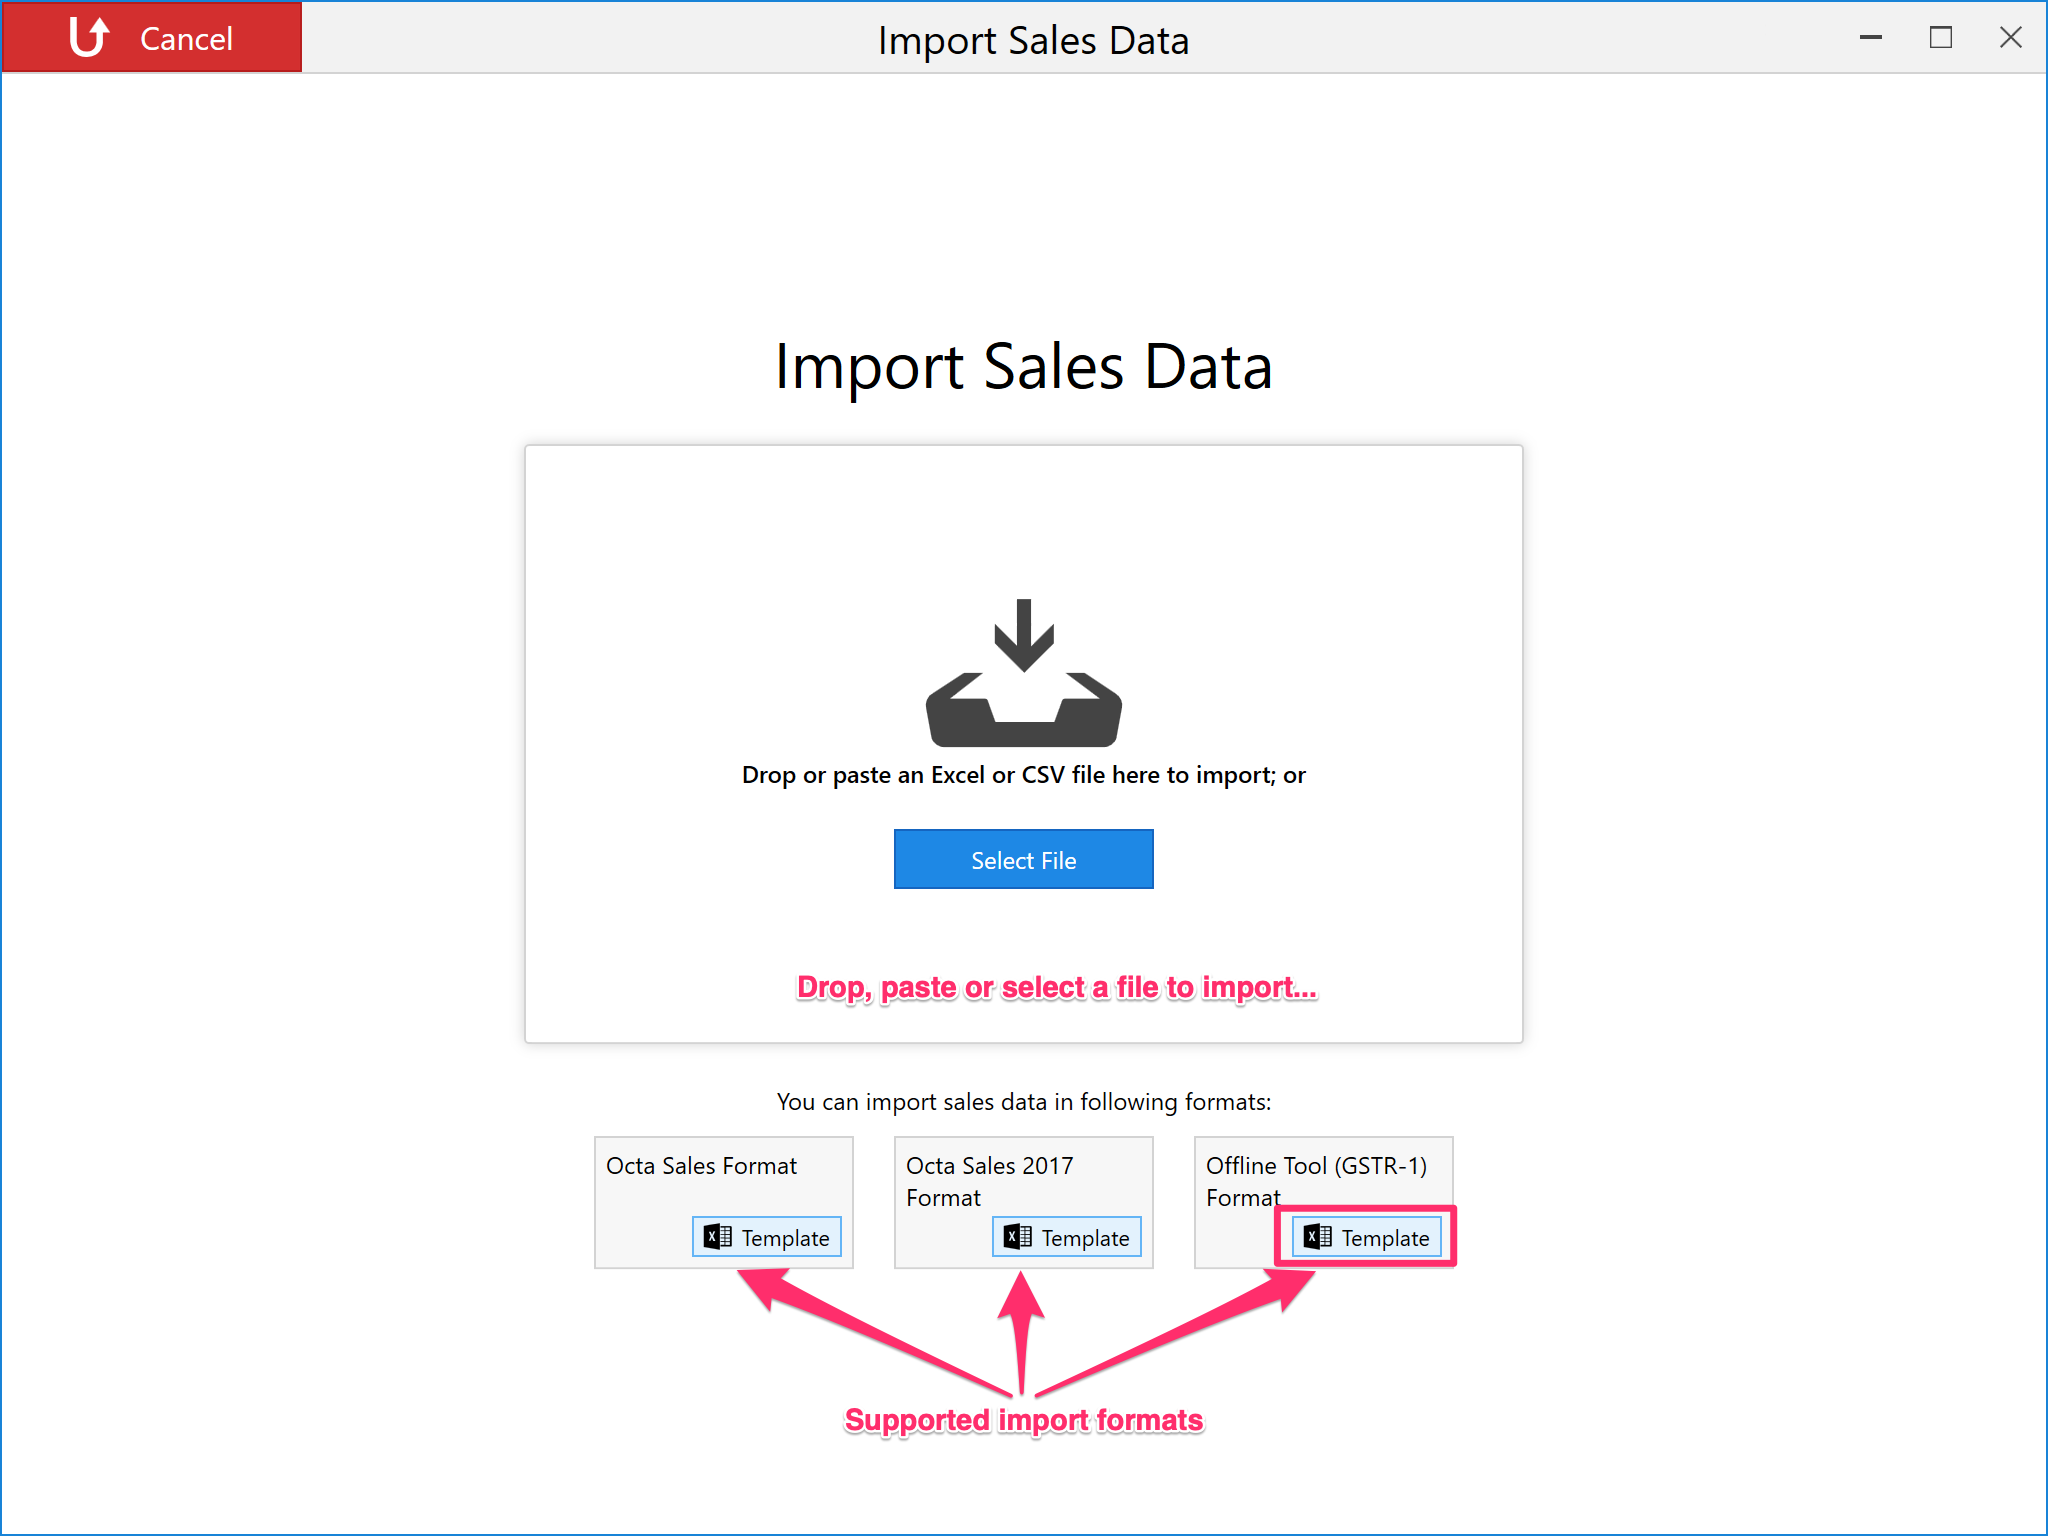 Sales import in Govt format